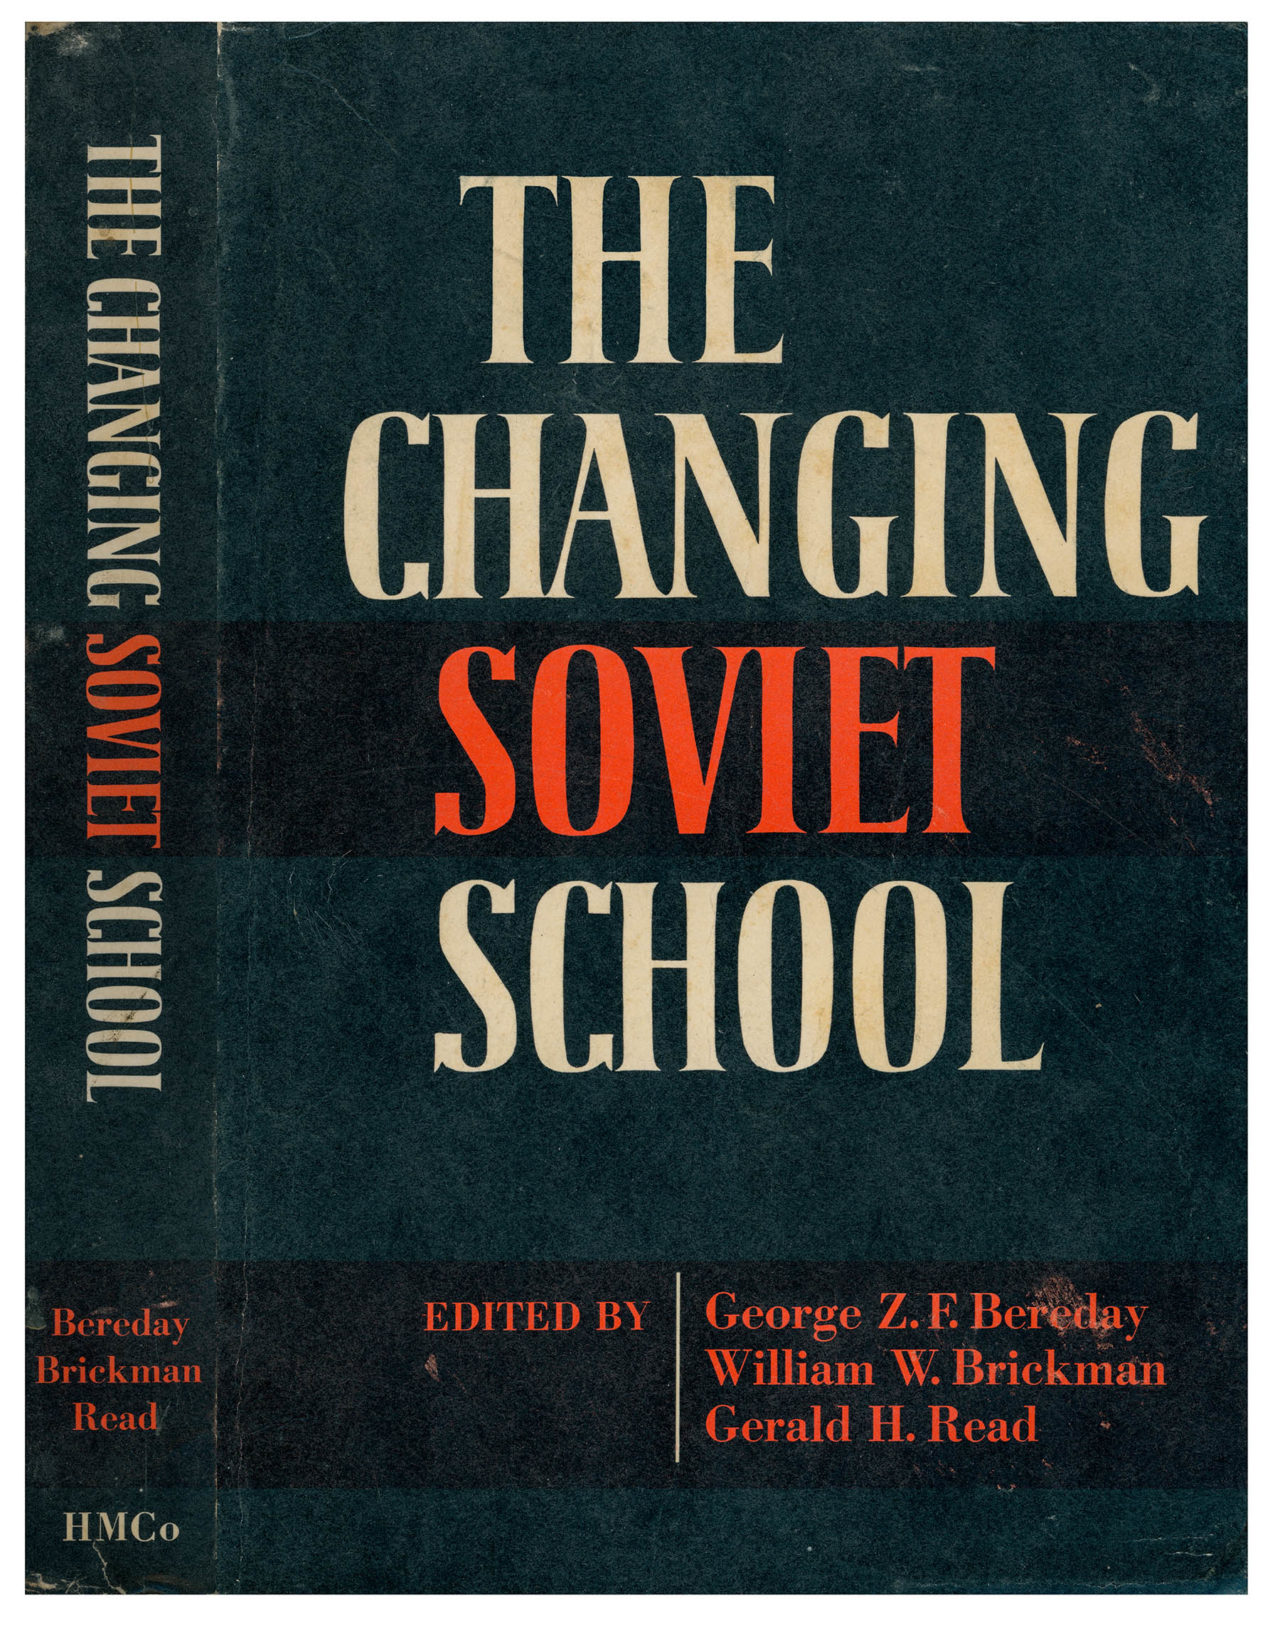 The Changing Soviet School